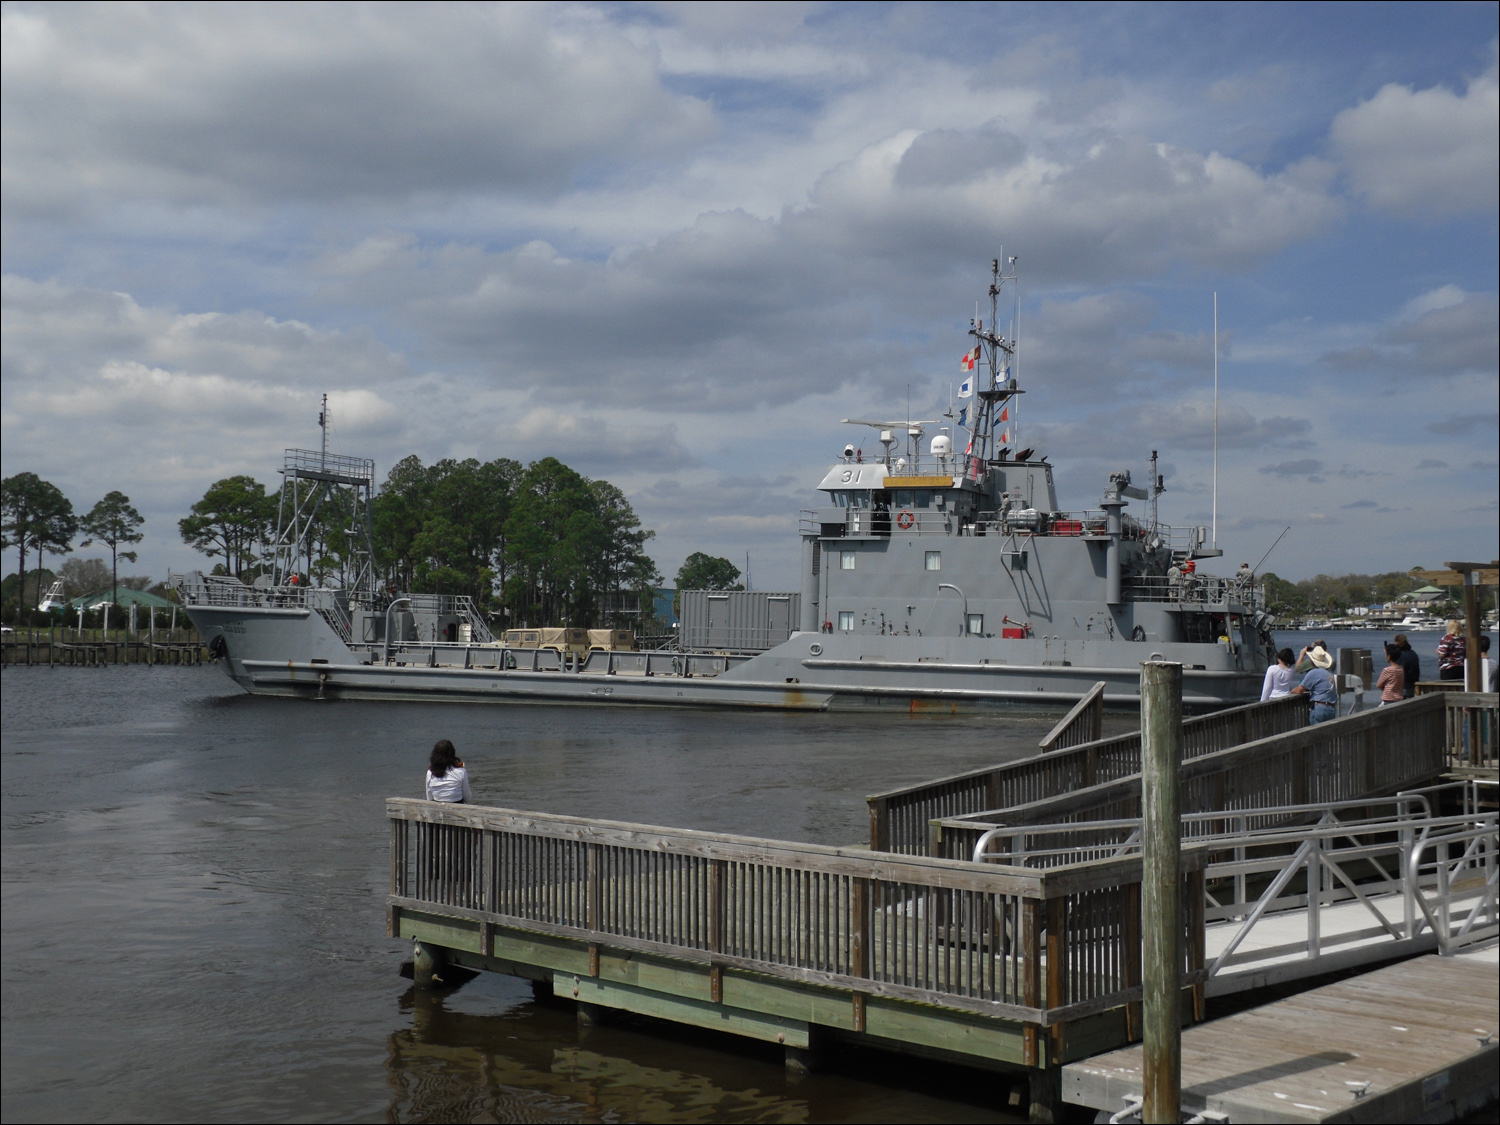 US Army LCU (Landing Craft Unit) New Orleans leaving port